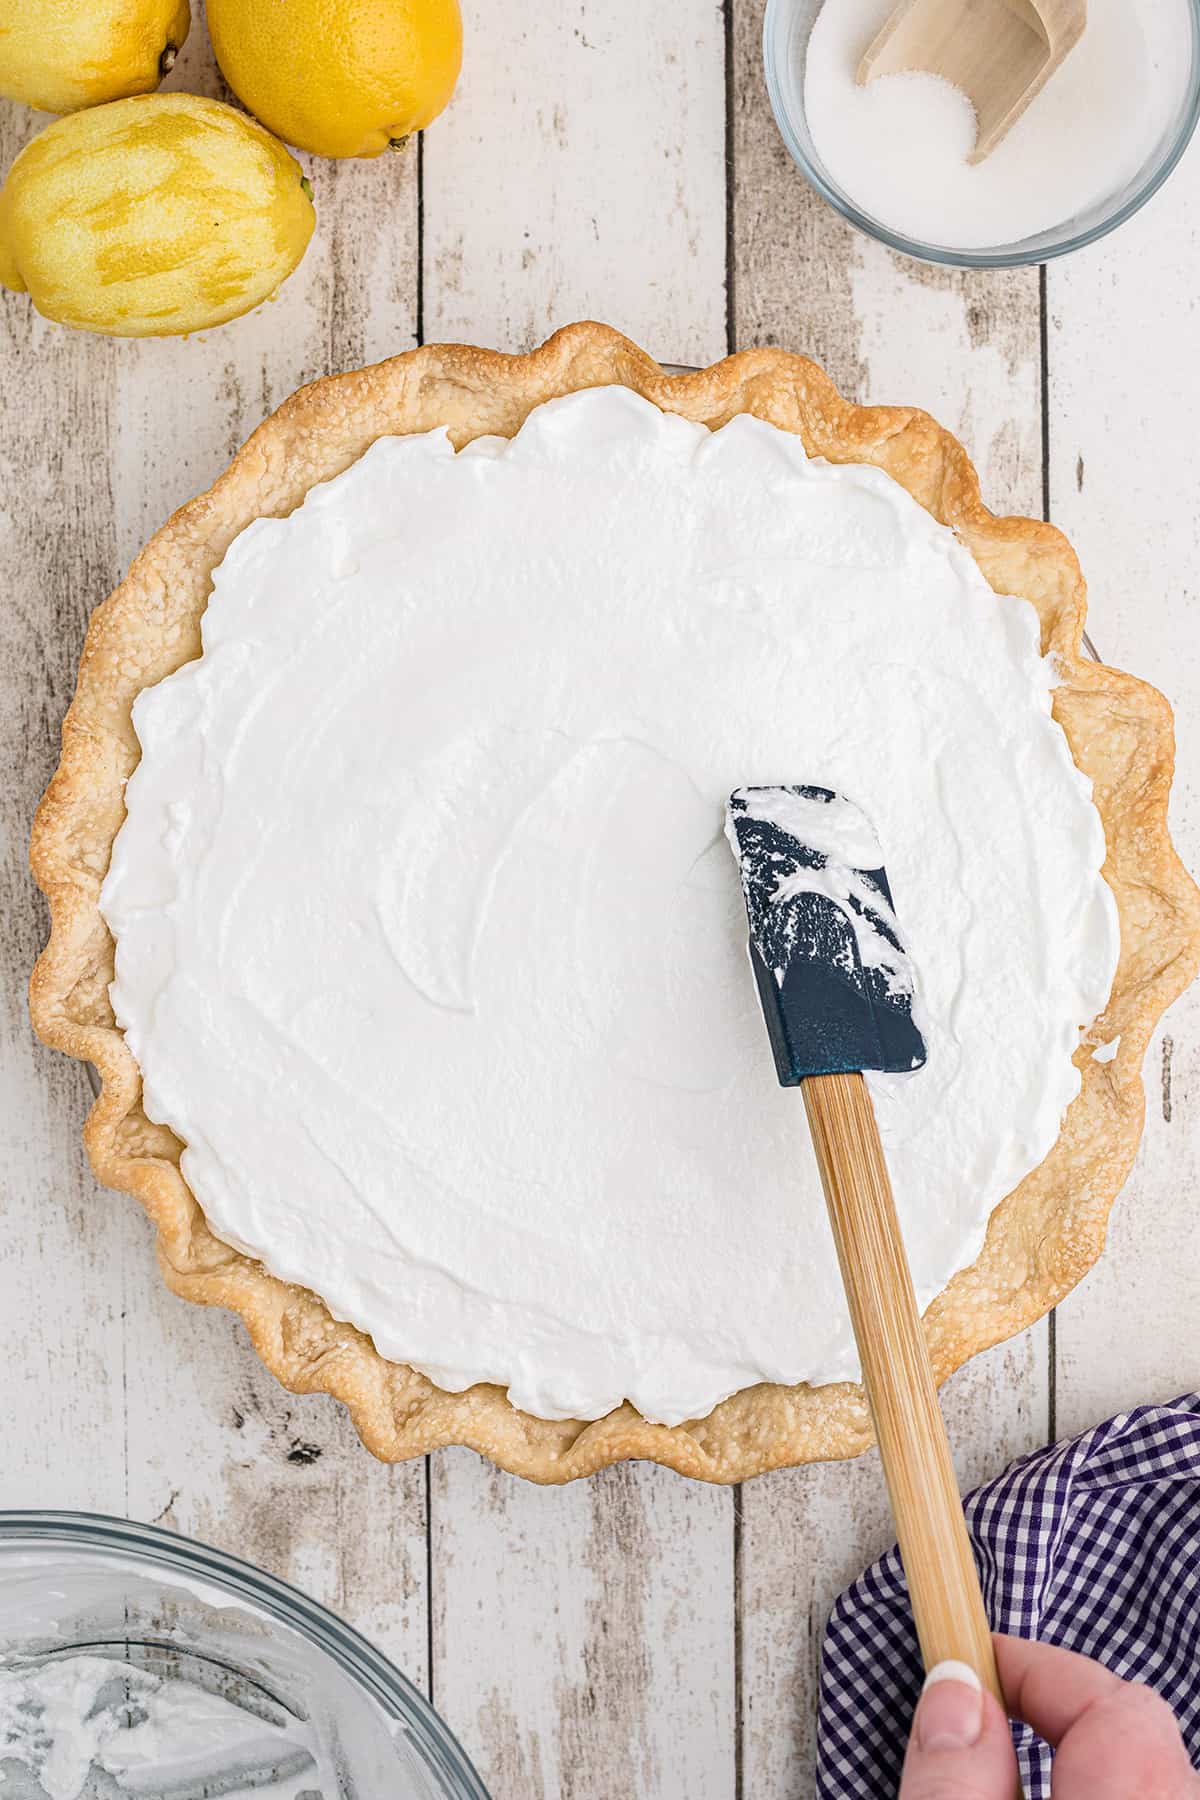 Spreading meringue on top of pie filling.